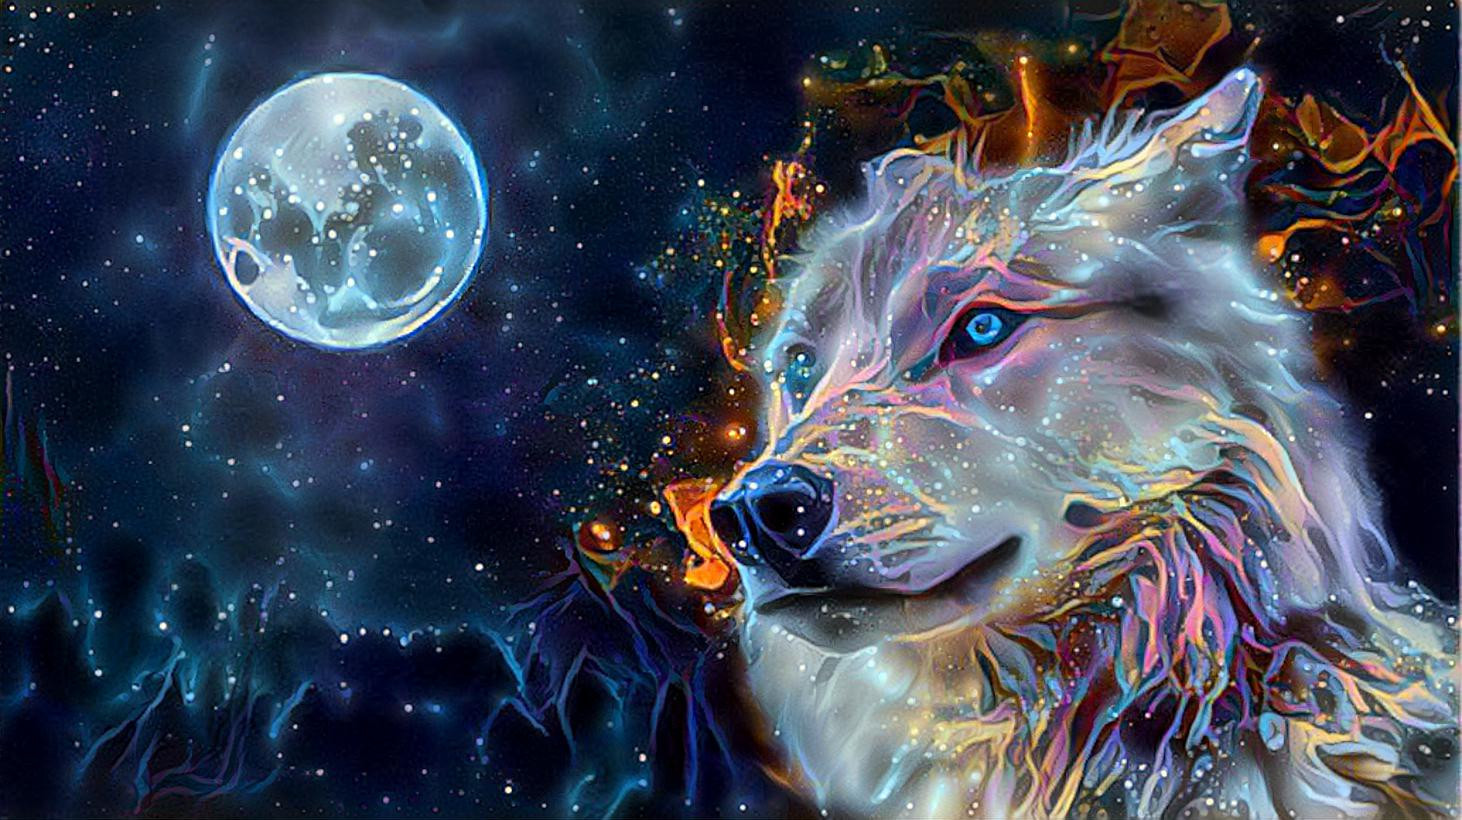 Wolf at Night